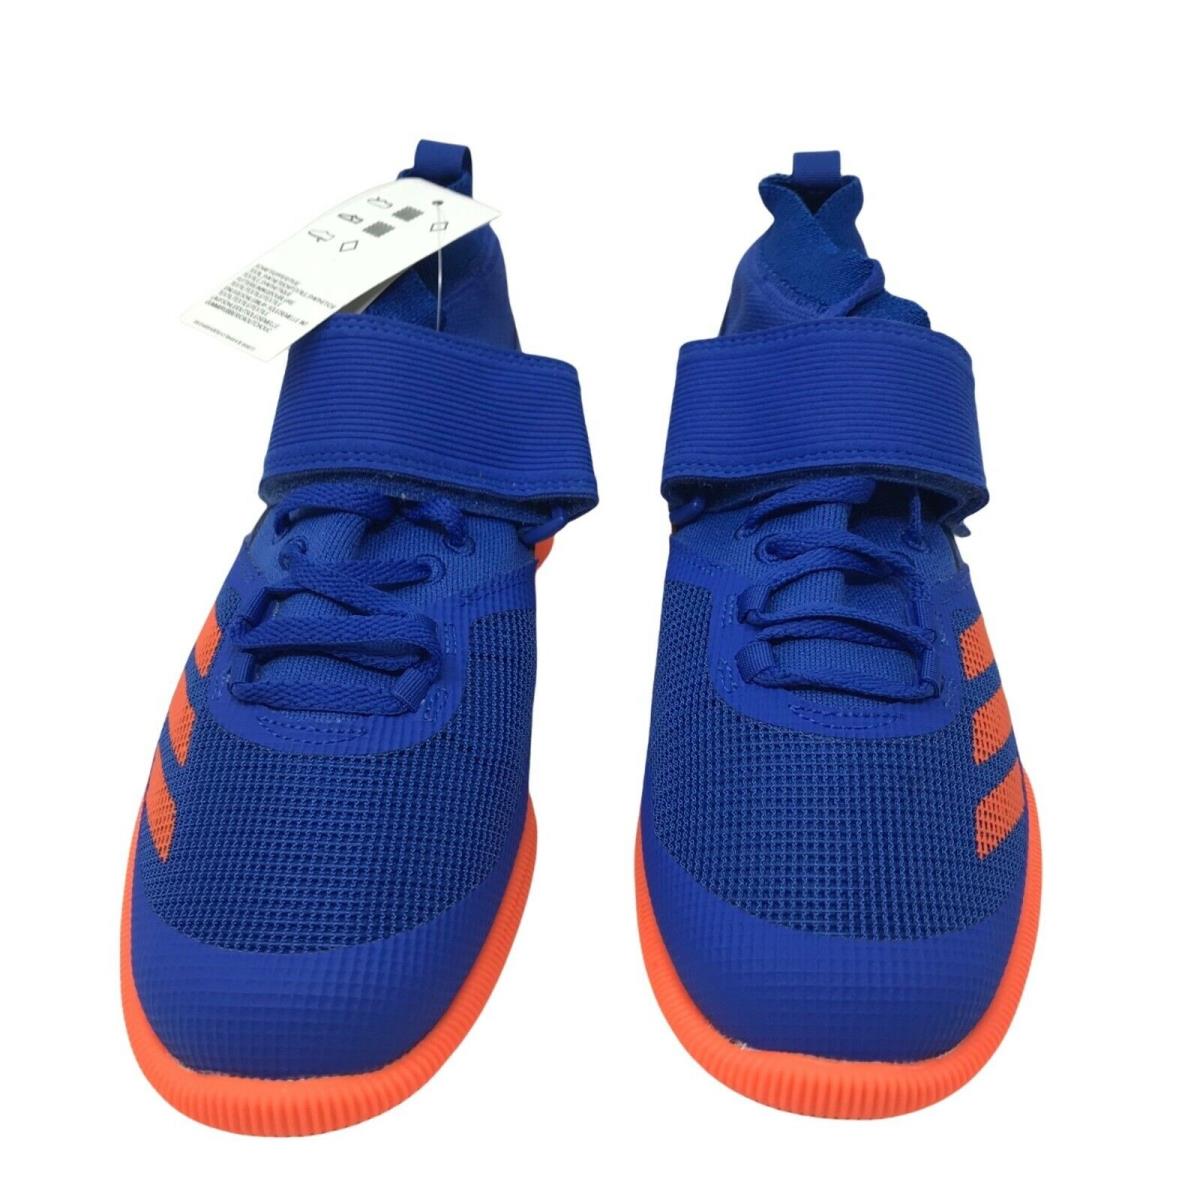 Adidas Men`s Crazy Power Cross Trainer Size 6 - Blue/Orange